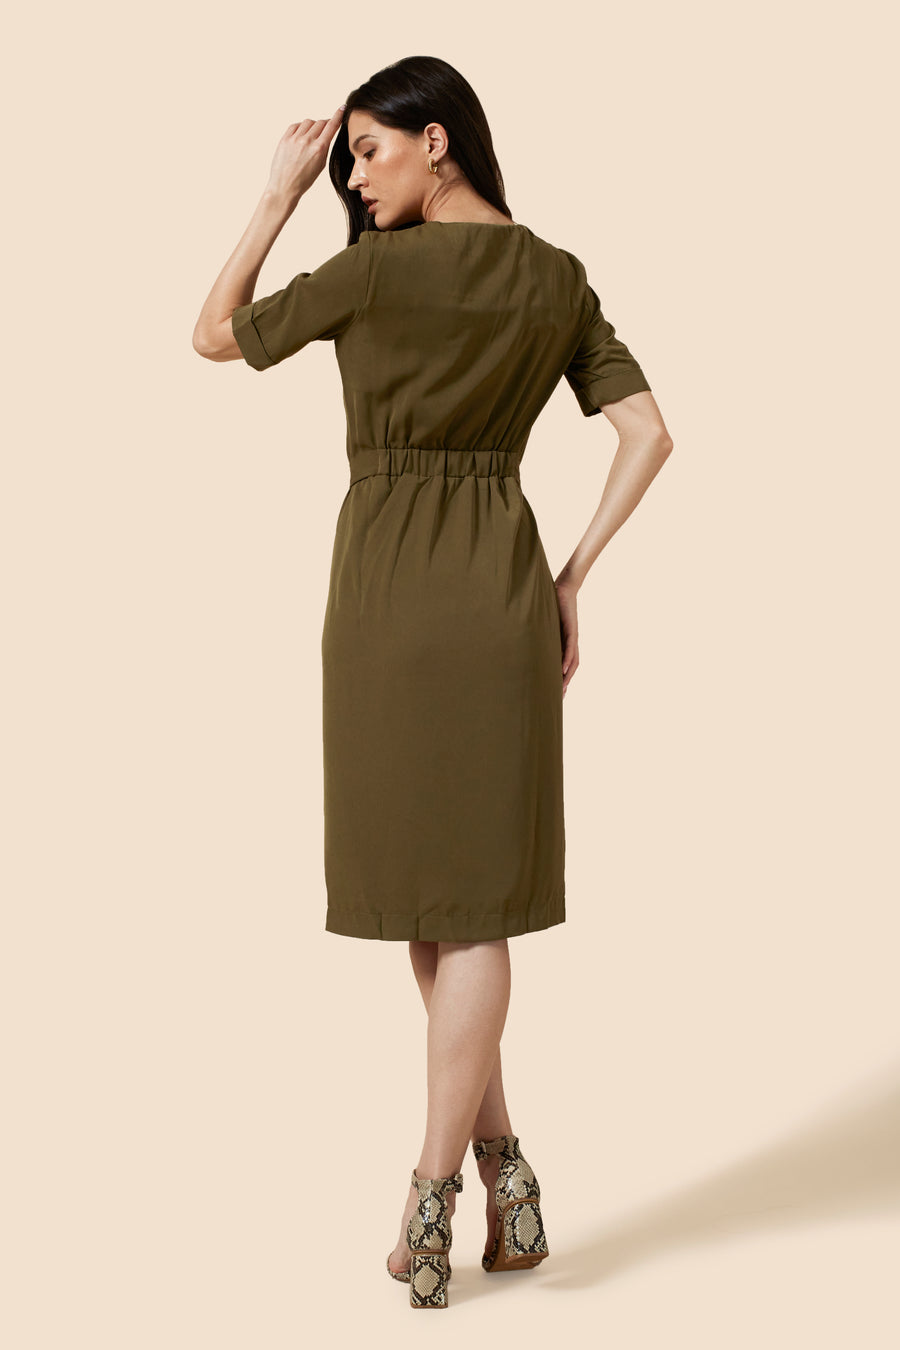 The Emelie Dress - Olive Green